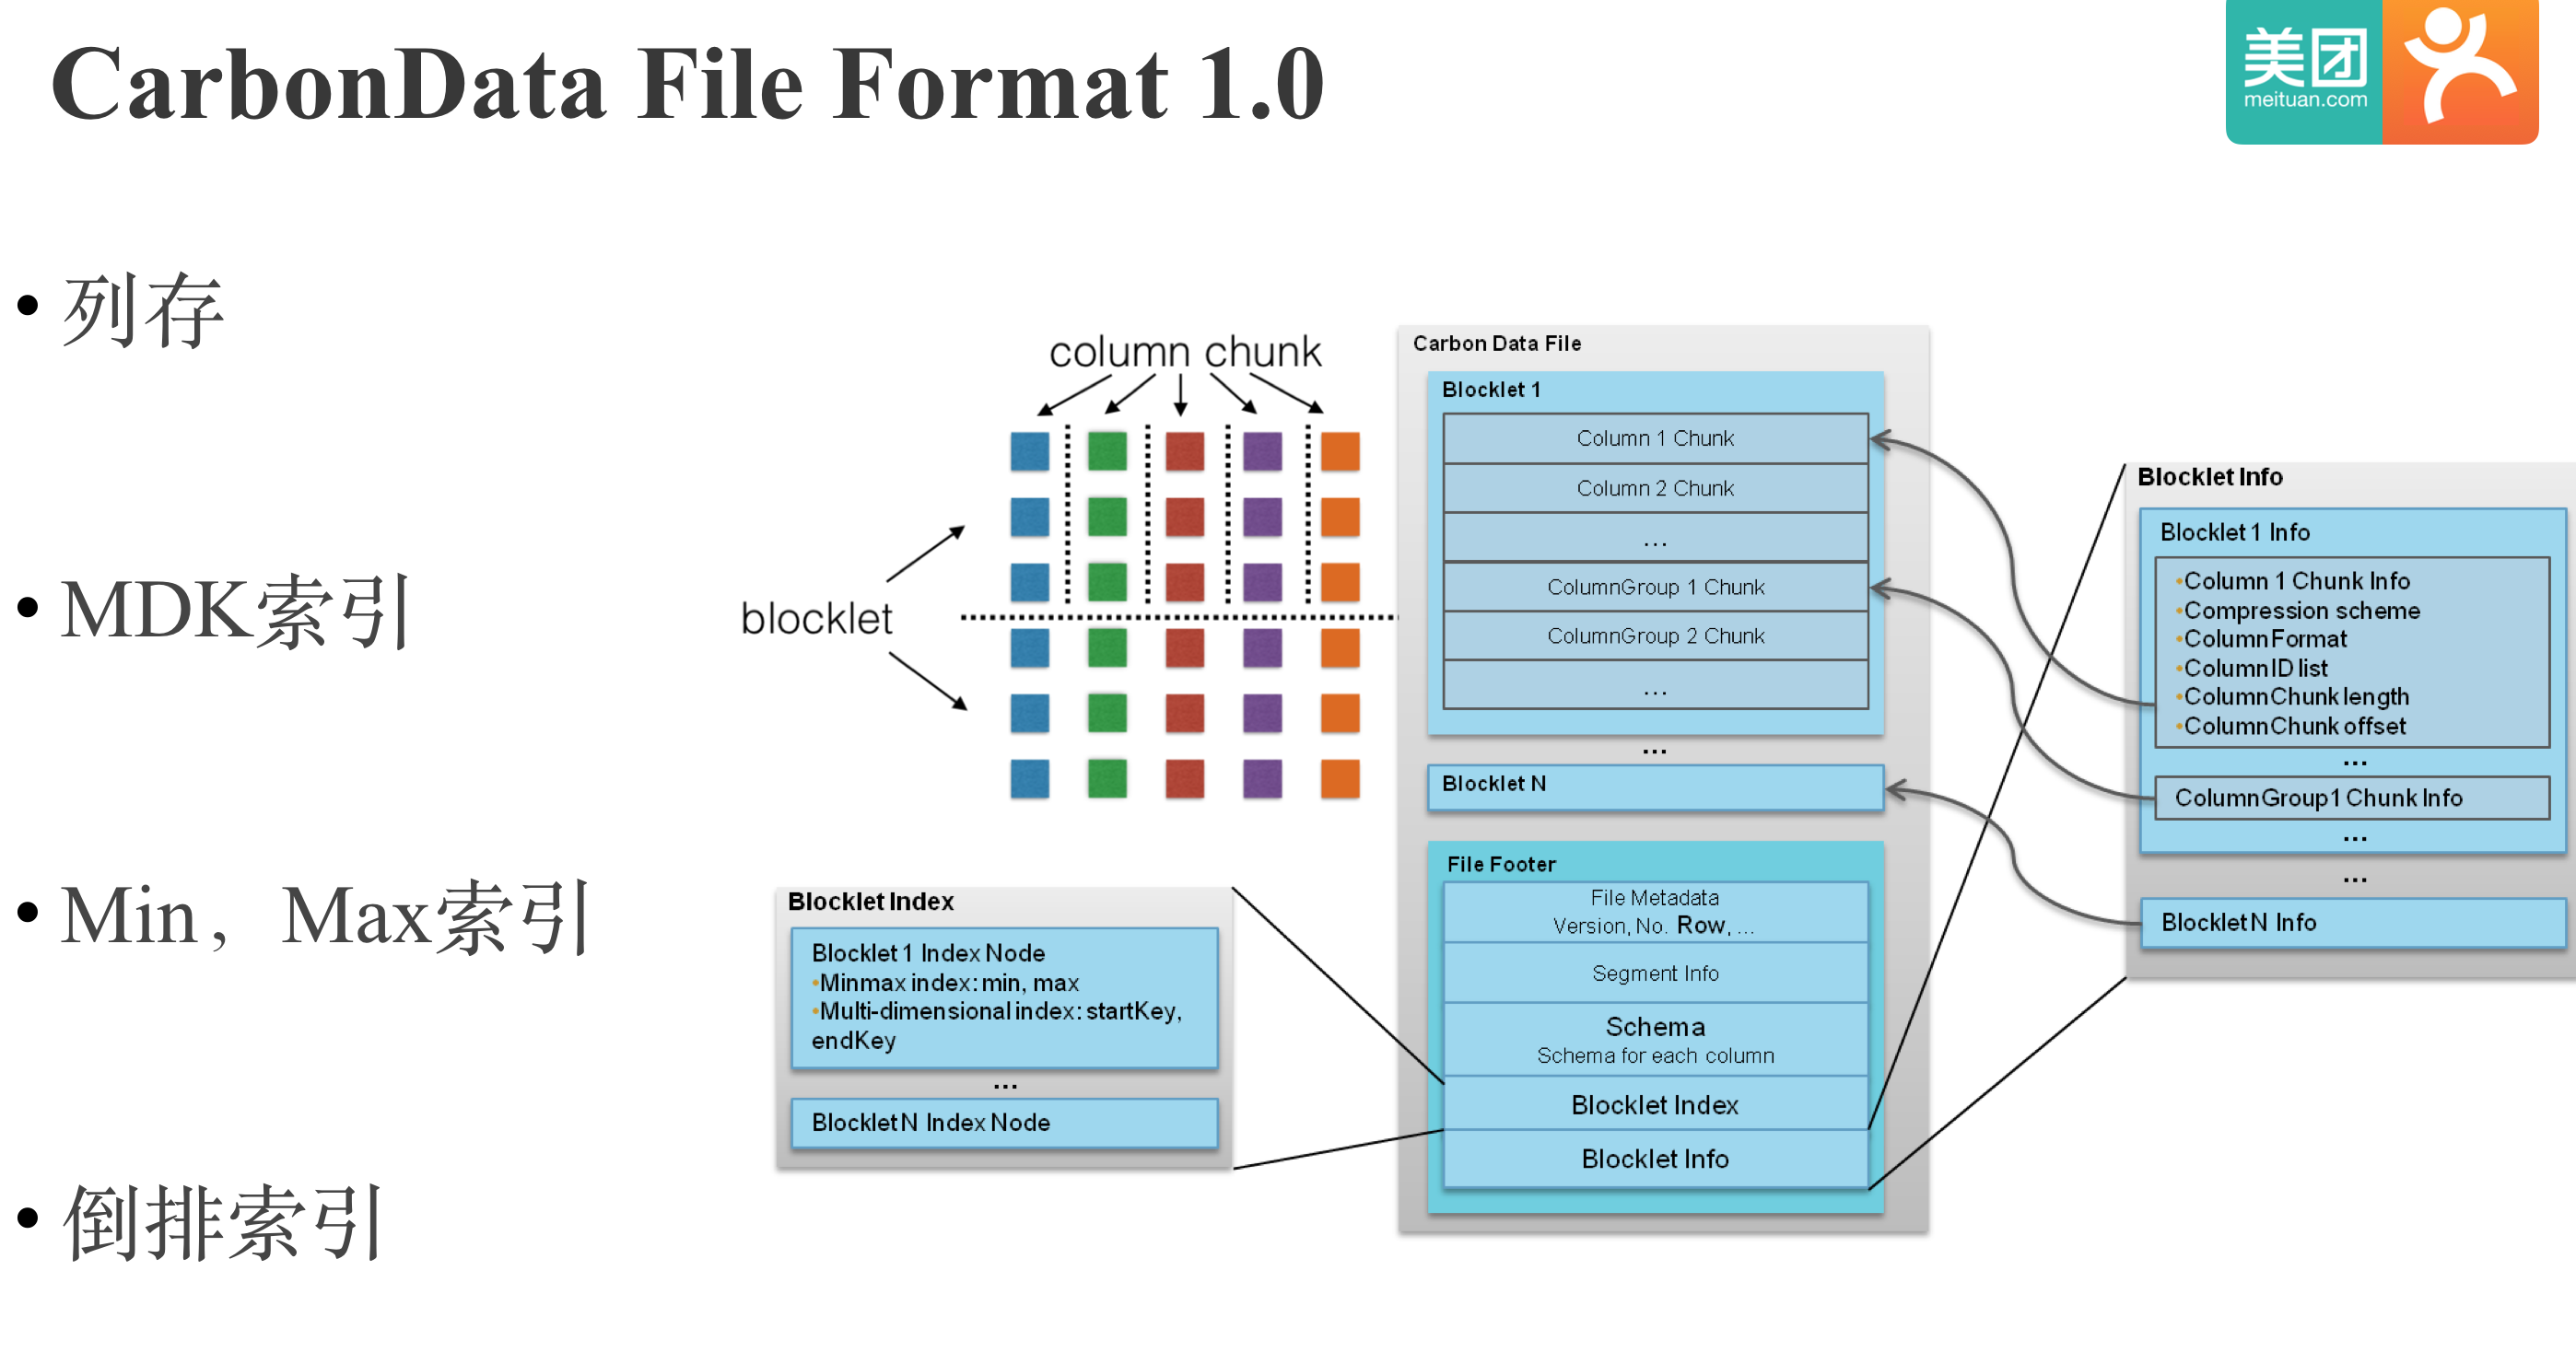 CarbonData File Format